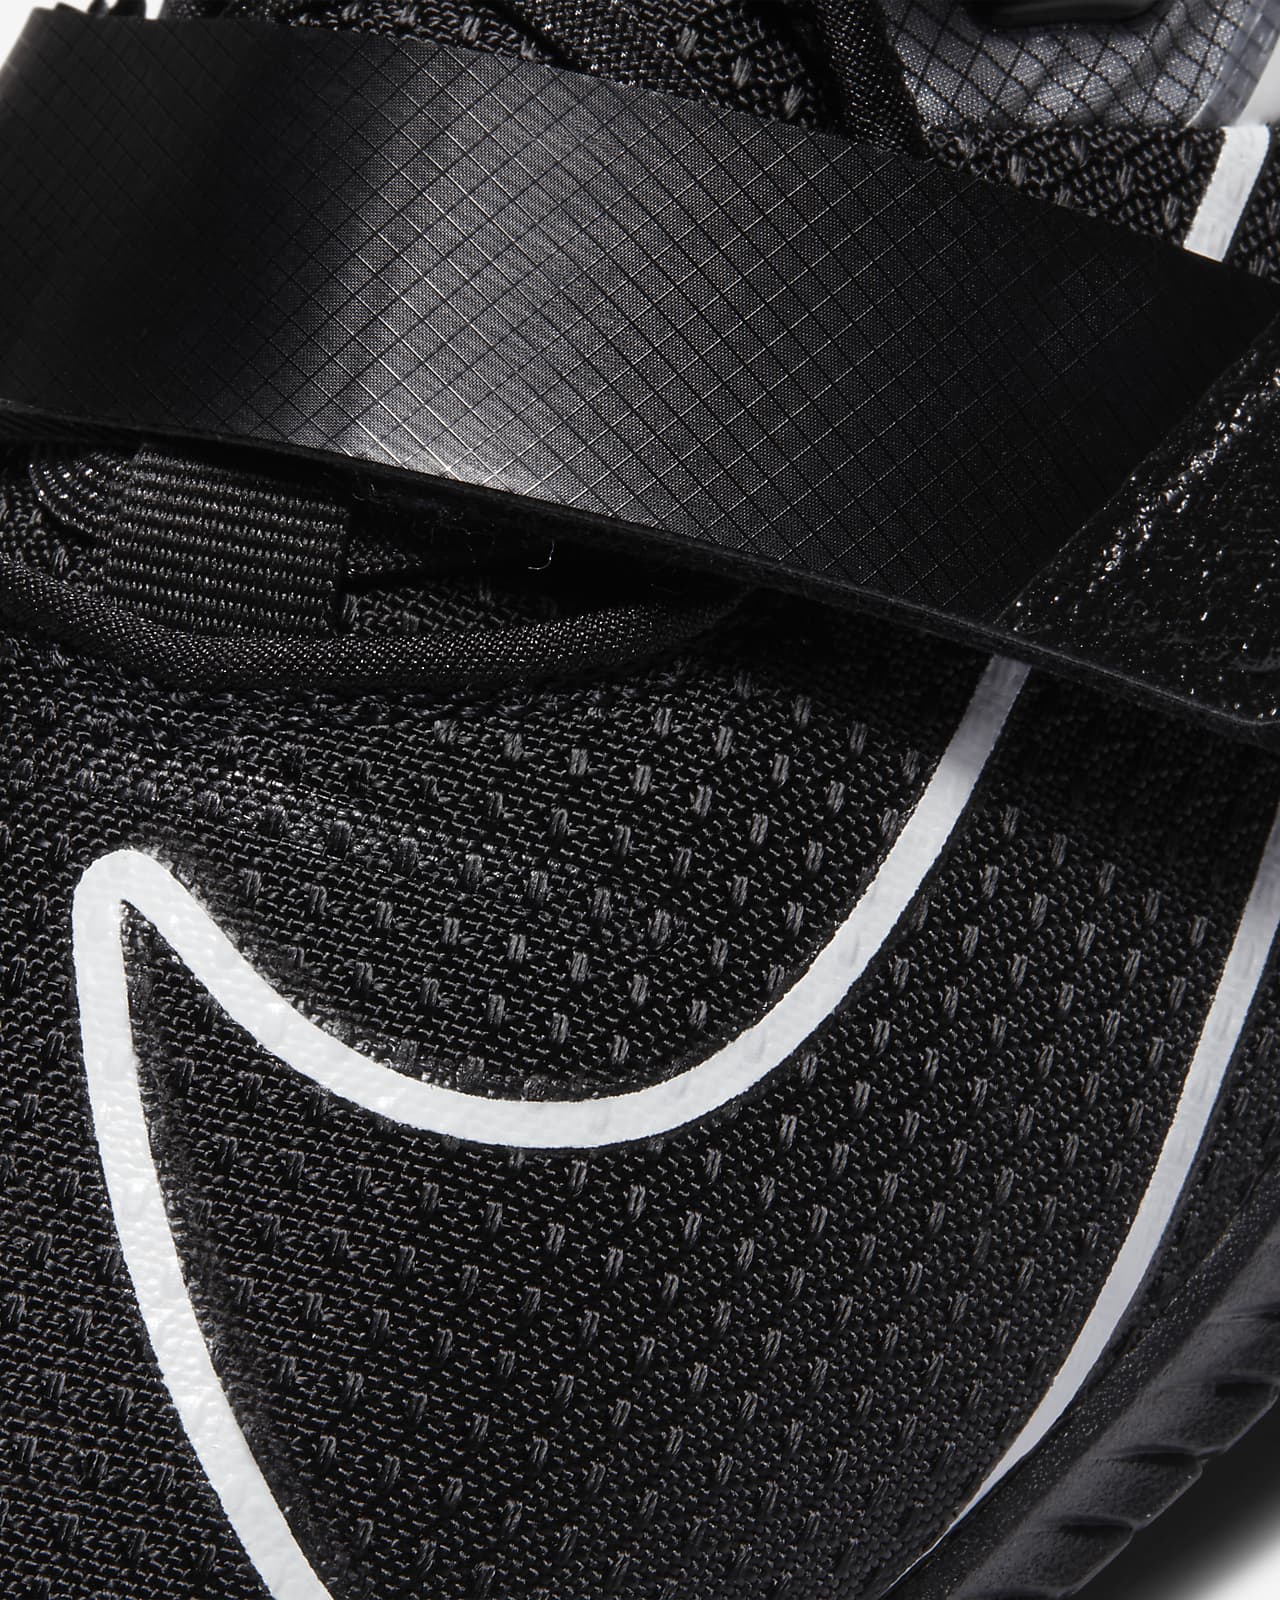 Calzado de levantamiento de pesas Nike Romaleos 4